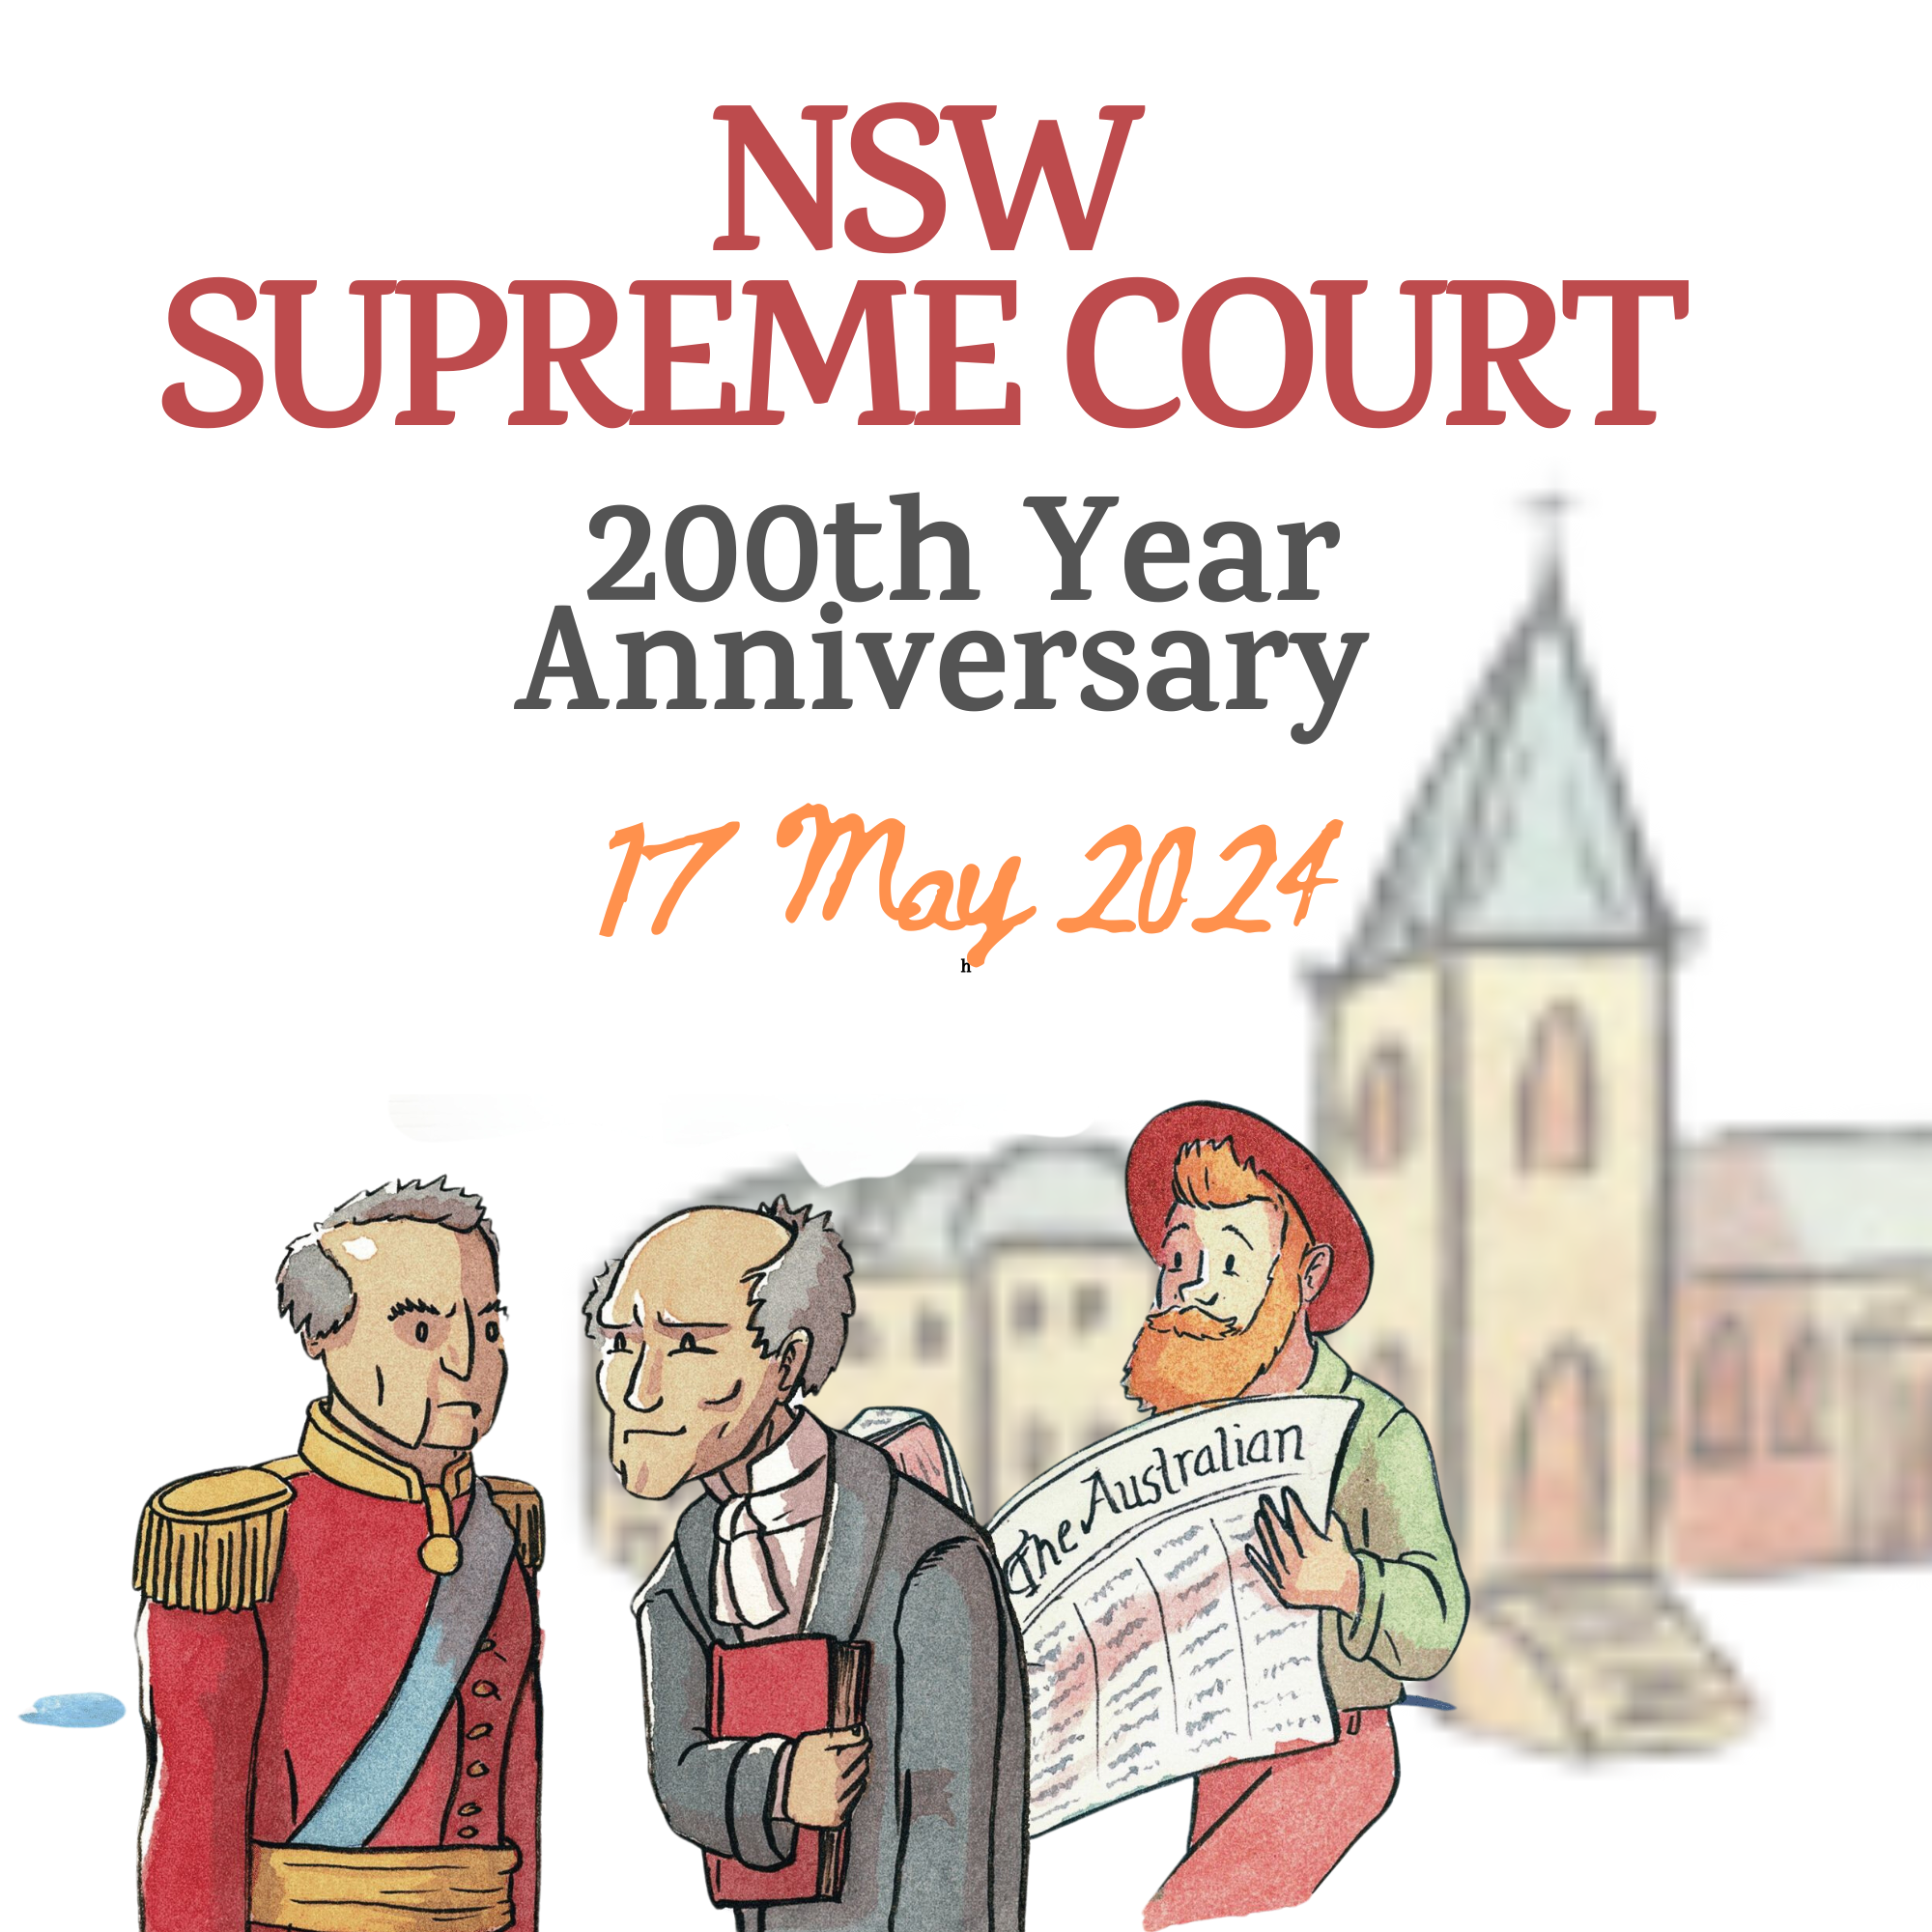 Anniversary of NSW Supreme Court